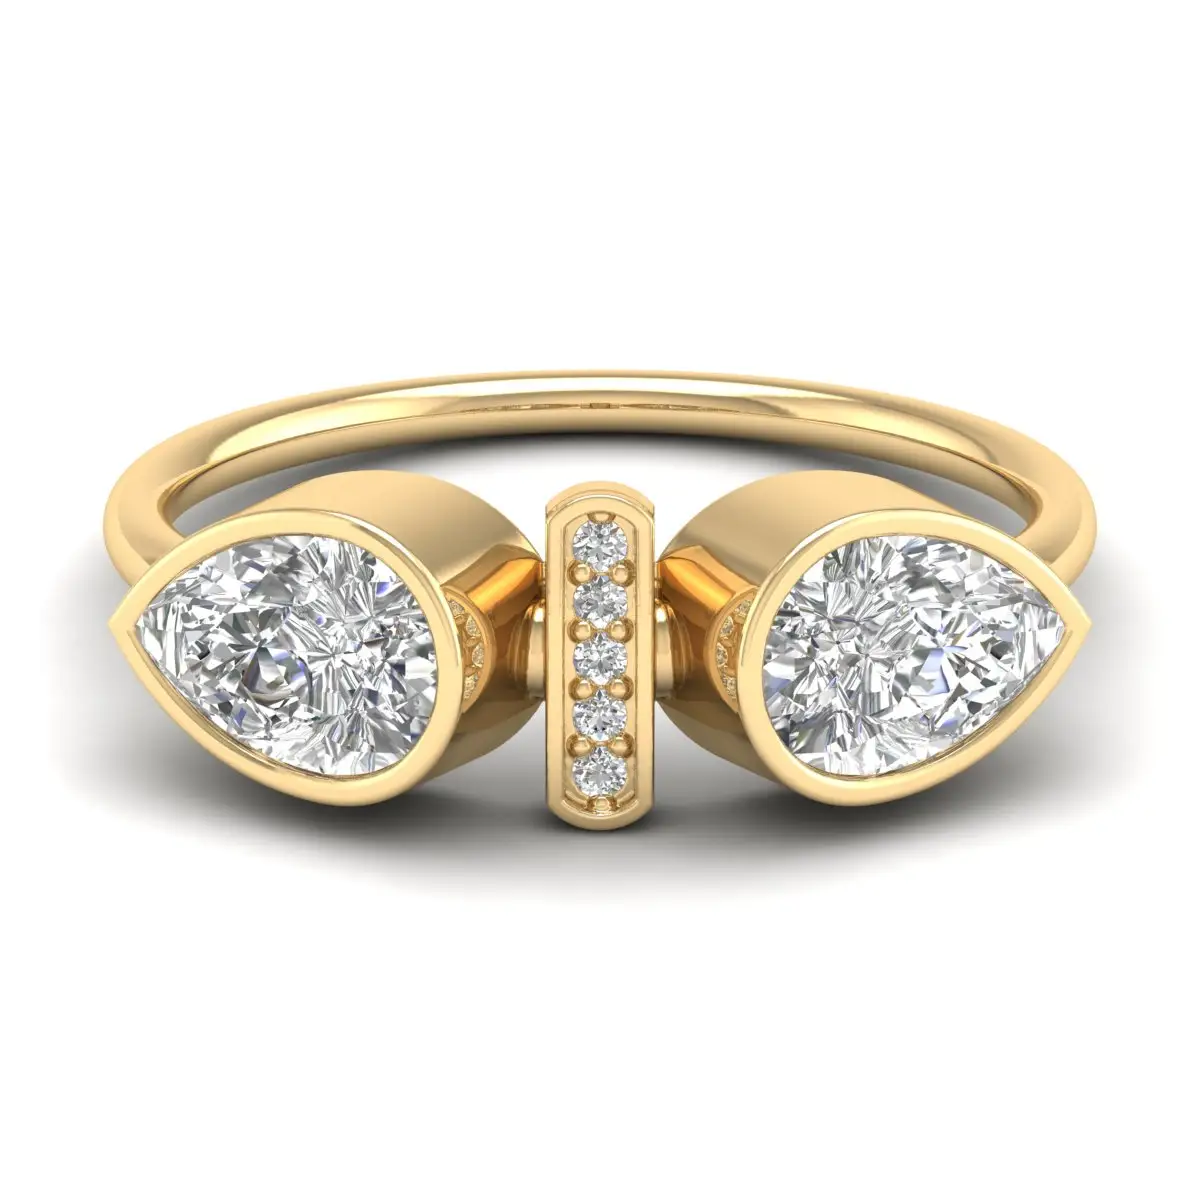 REYES GRA cincin bersertifikat VVS Moissanite batu pir ganda dalam 925 perak murni cincin pertunangan perhiasan pernikahan untuk hadiah